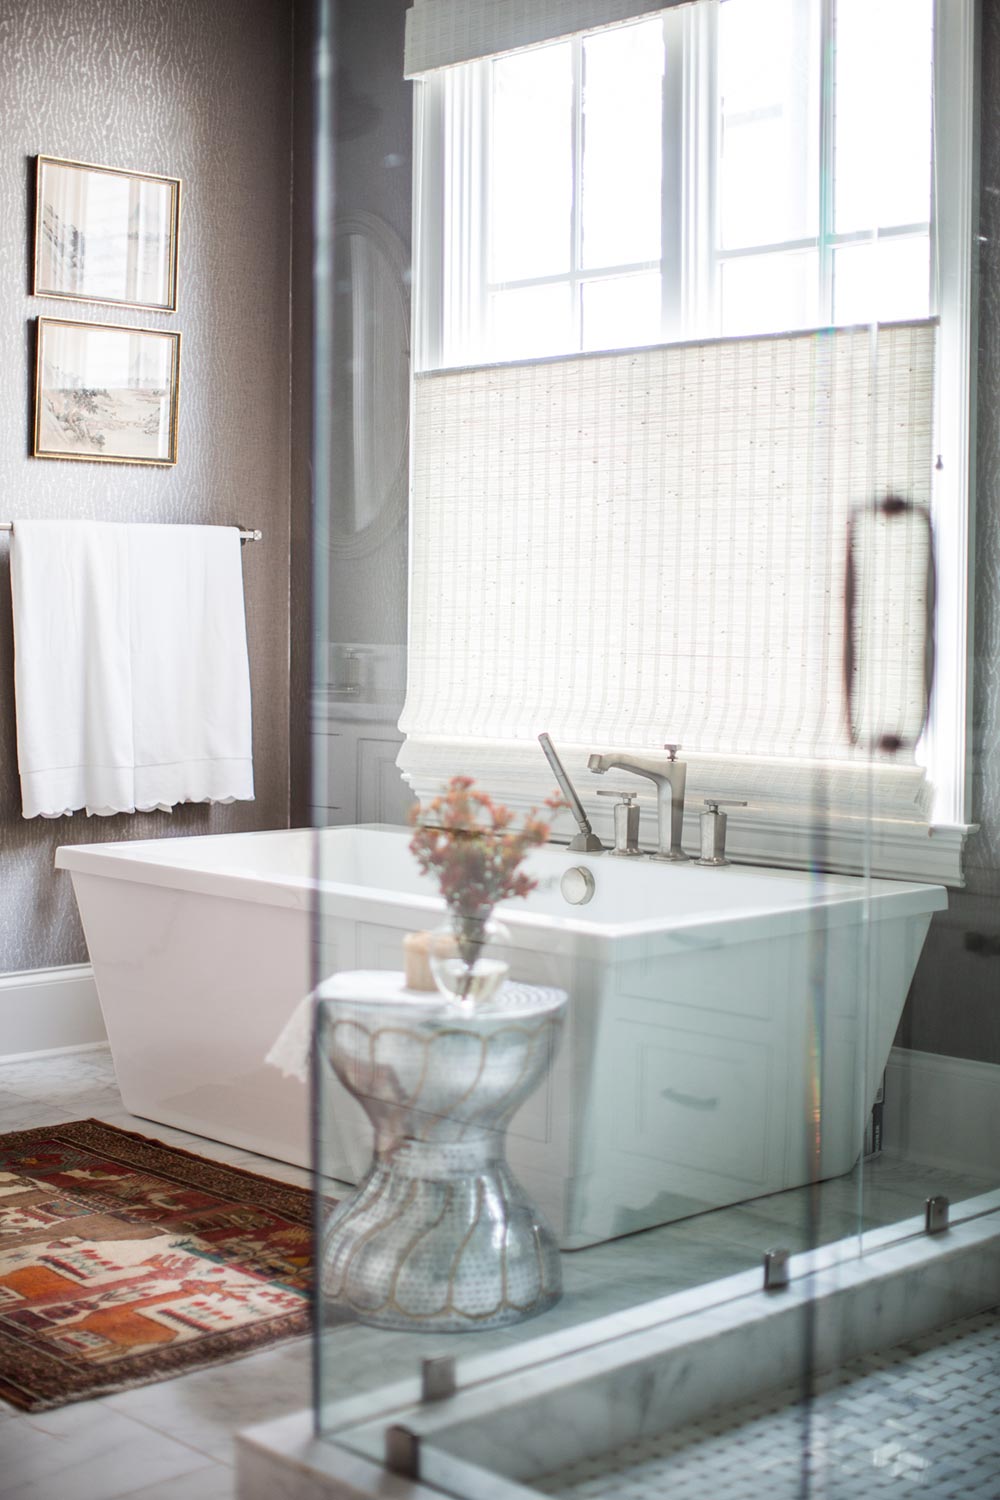 Large rectangle statement bathtub. Moody bathroom wallpaper. Tub side table. Large bathroom window with natural lighting.